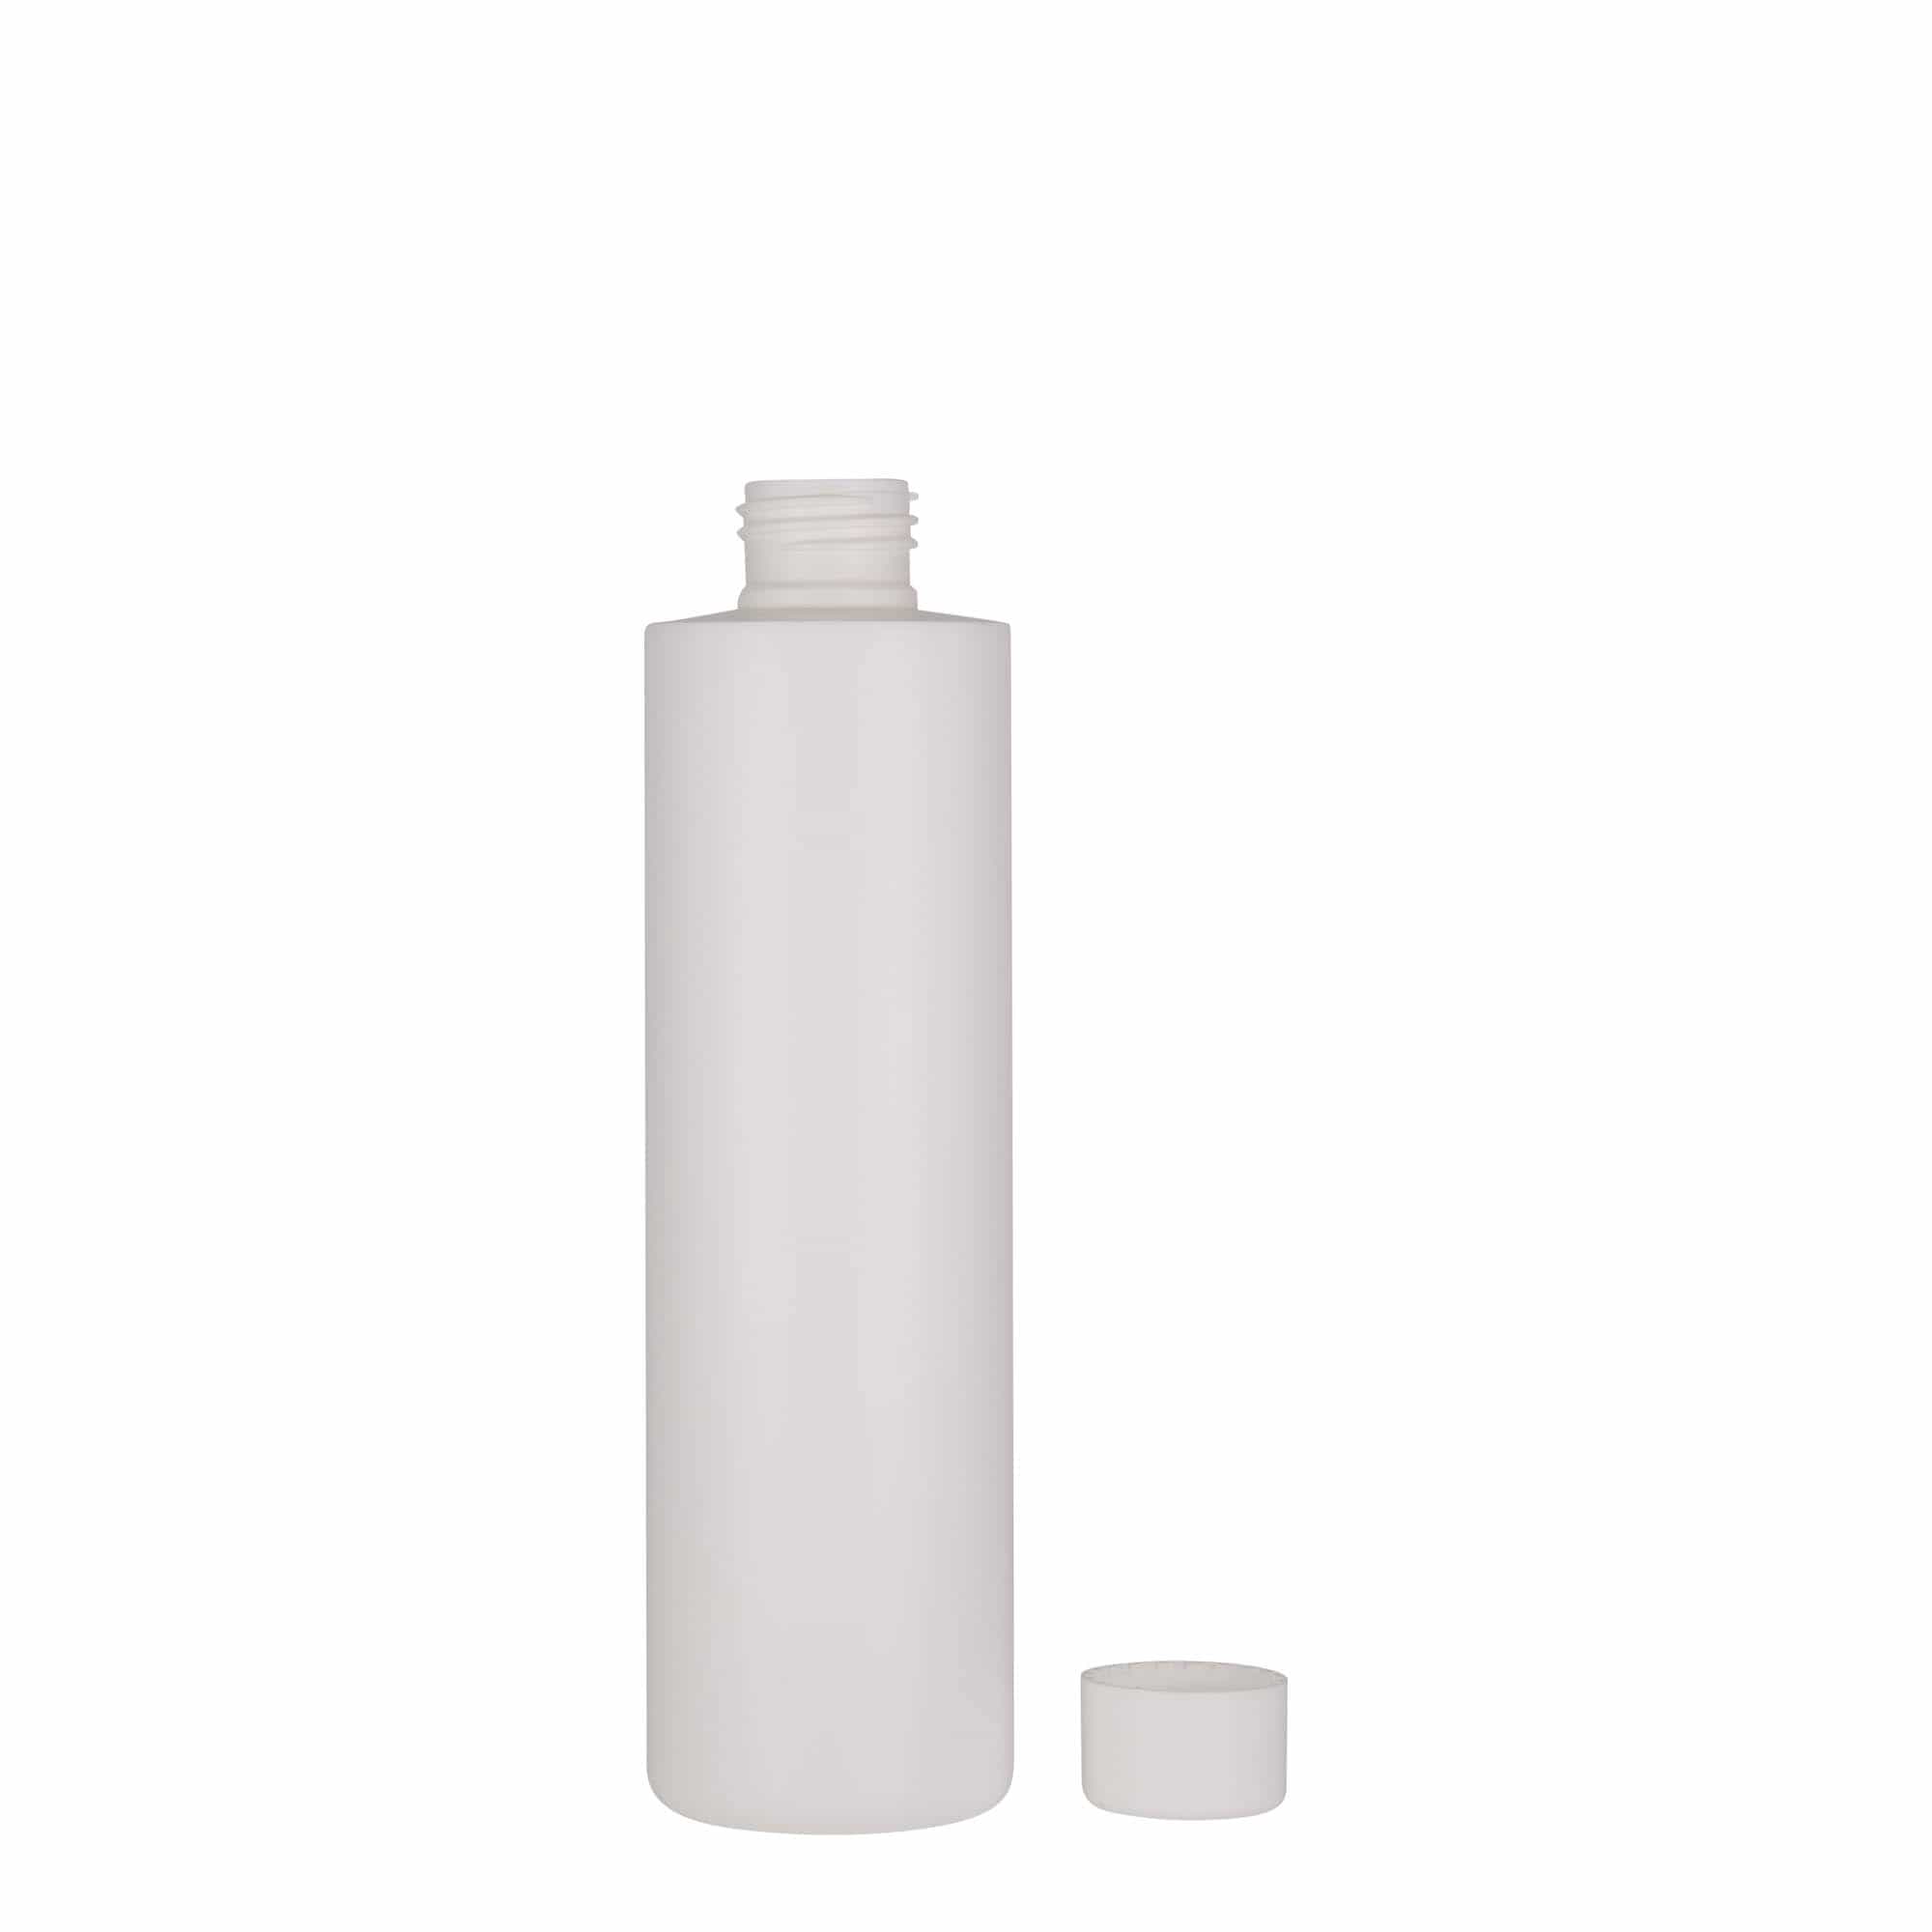 250 ml plastic bottle 'Pipe', HDPE, white, closure: GPI 24/410